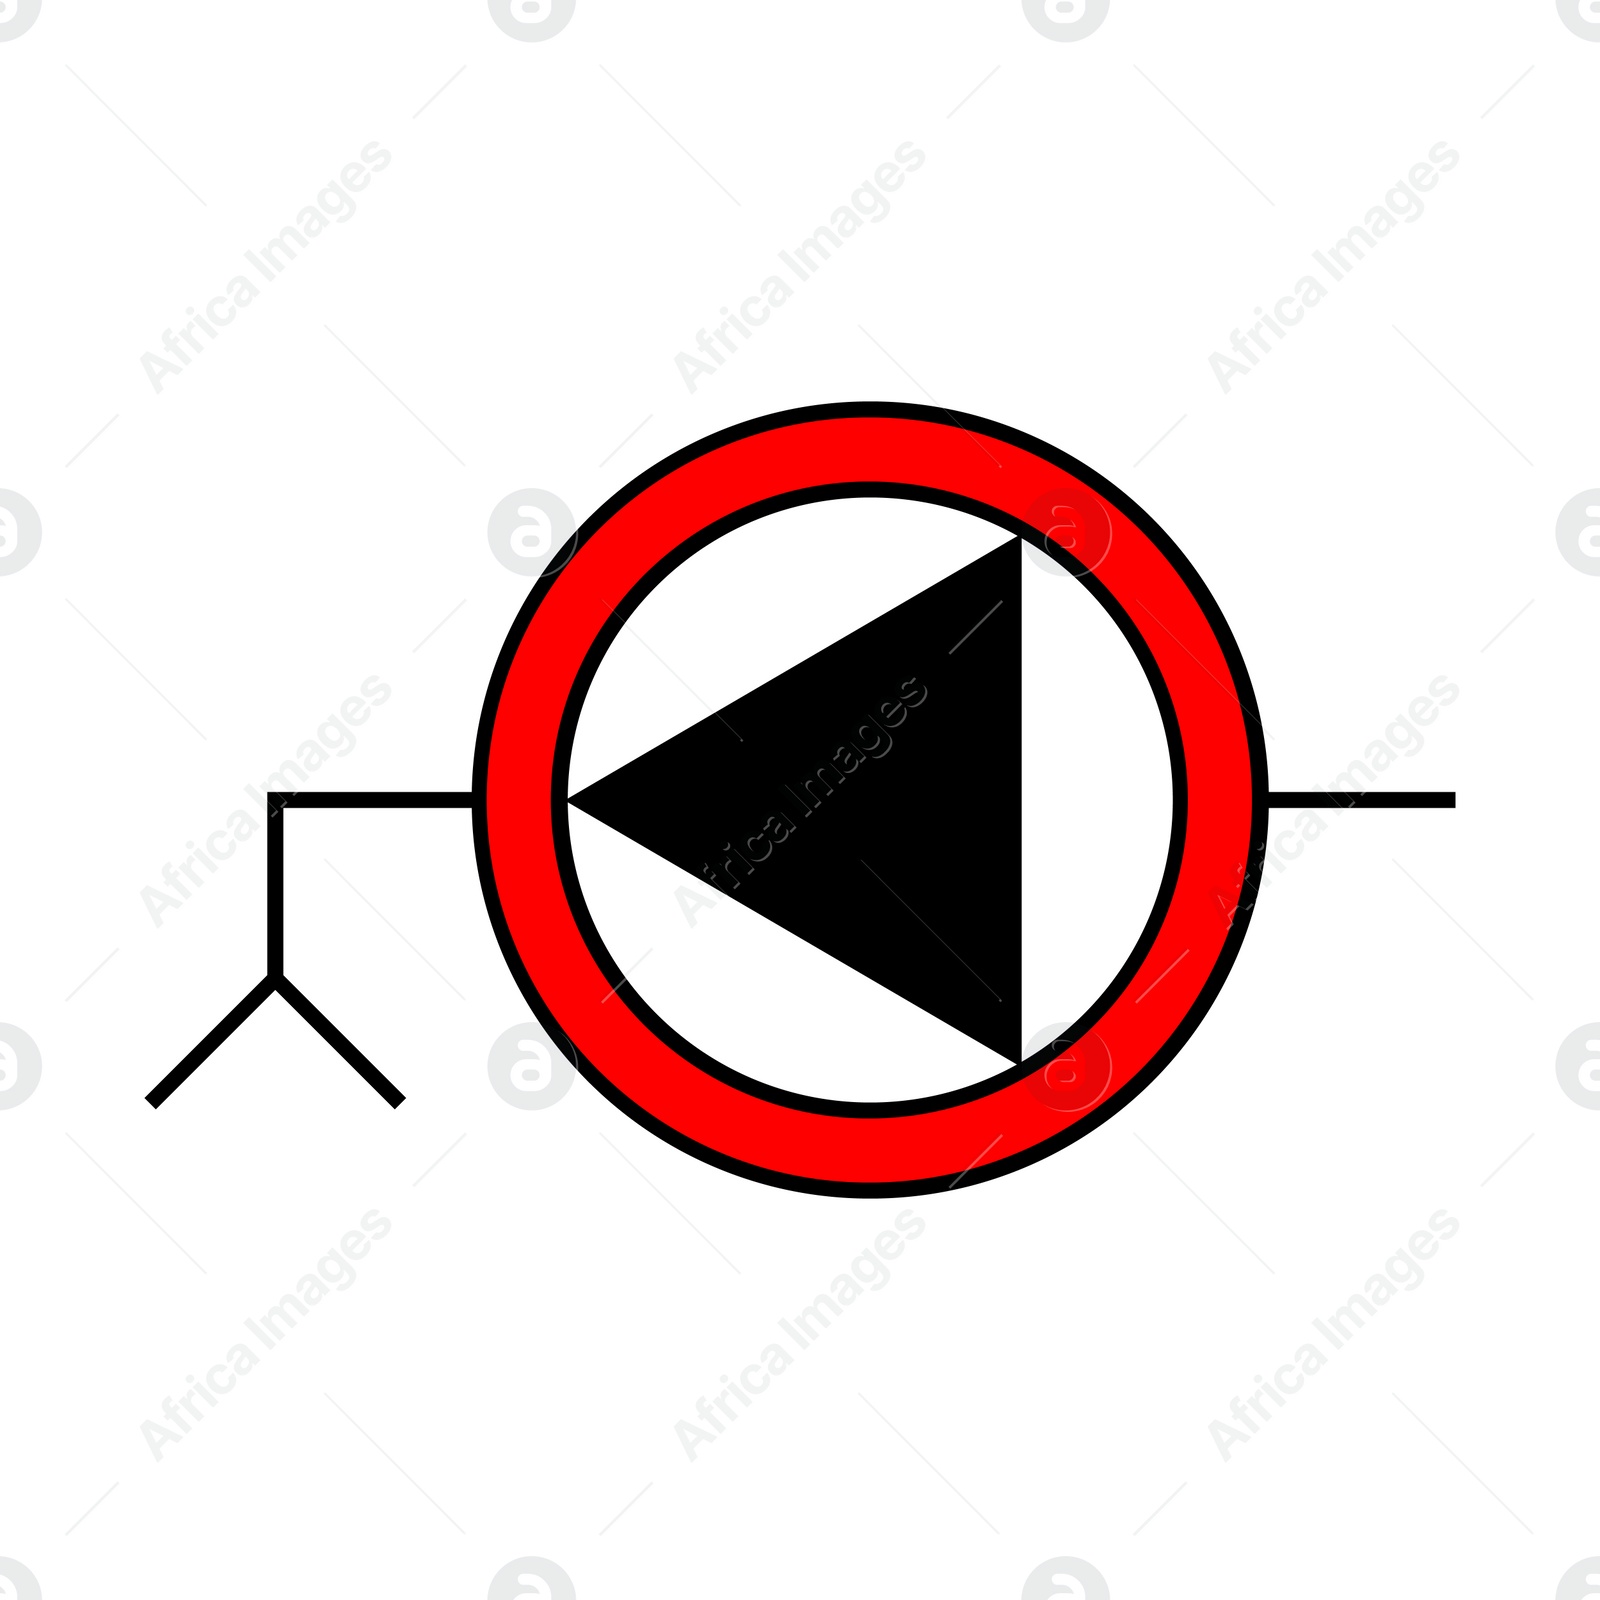 Image of International Maritime Organization (IMO) sign, illustration.  Emergency bilge pump